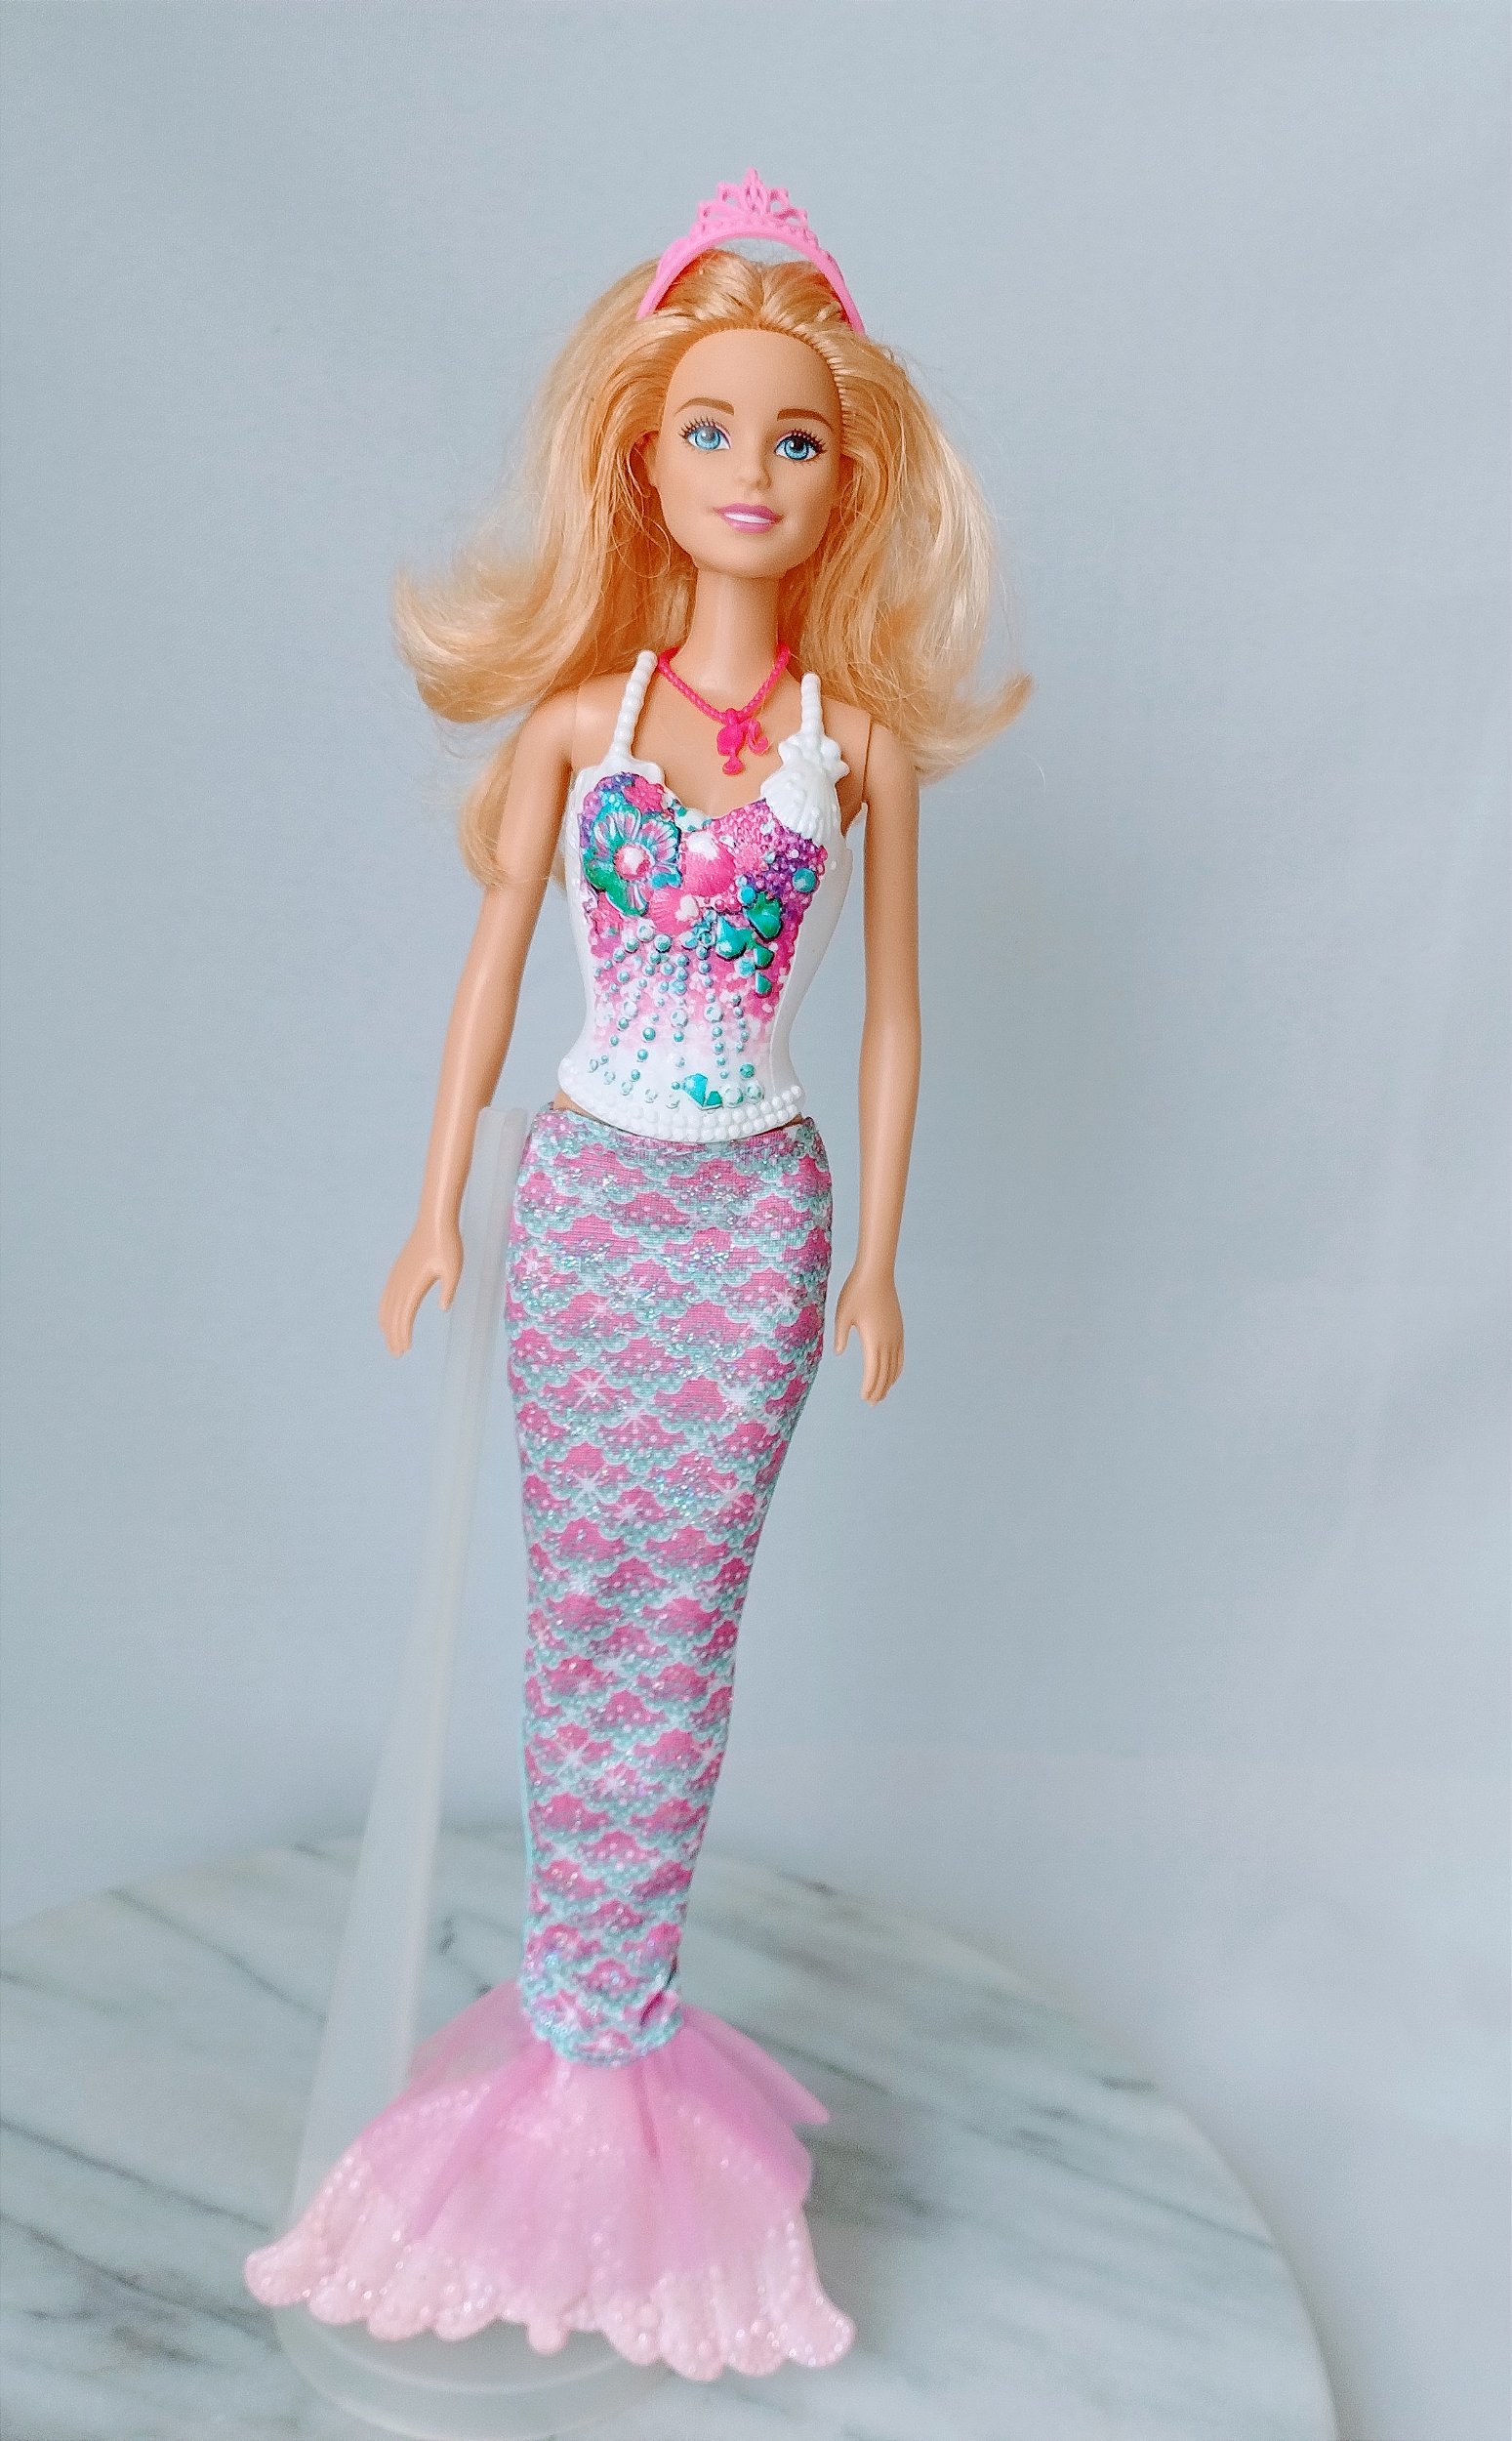 Barbie sereia mix and match - Taffy Shop - Brechó de brinquedos